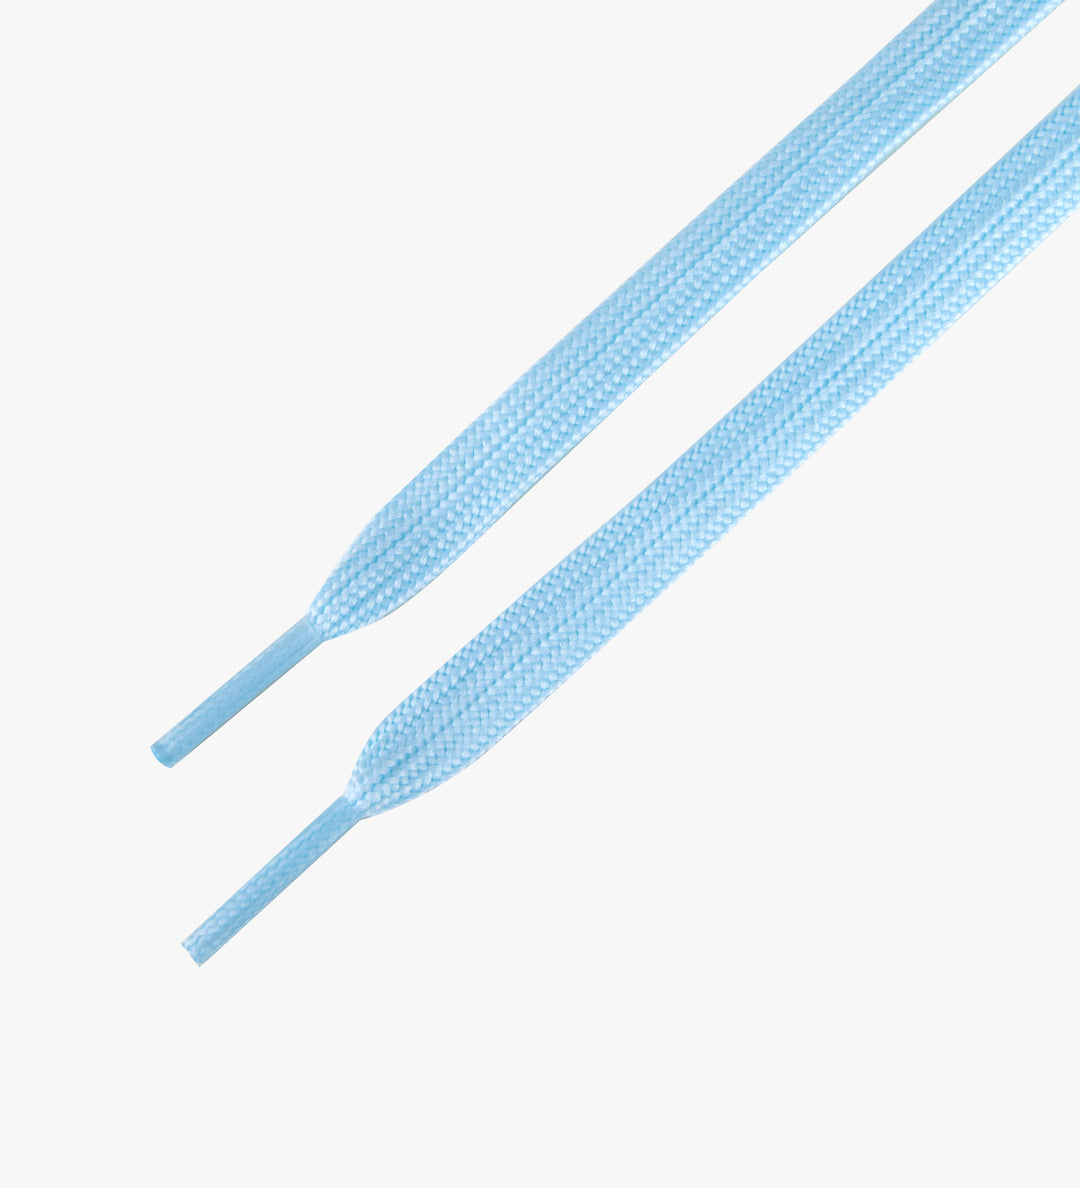 c7skates sky blue roller skate laces 80-inch ¾ inch TETORON™ Polyester flat lay 